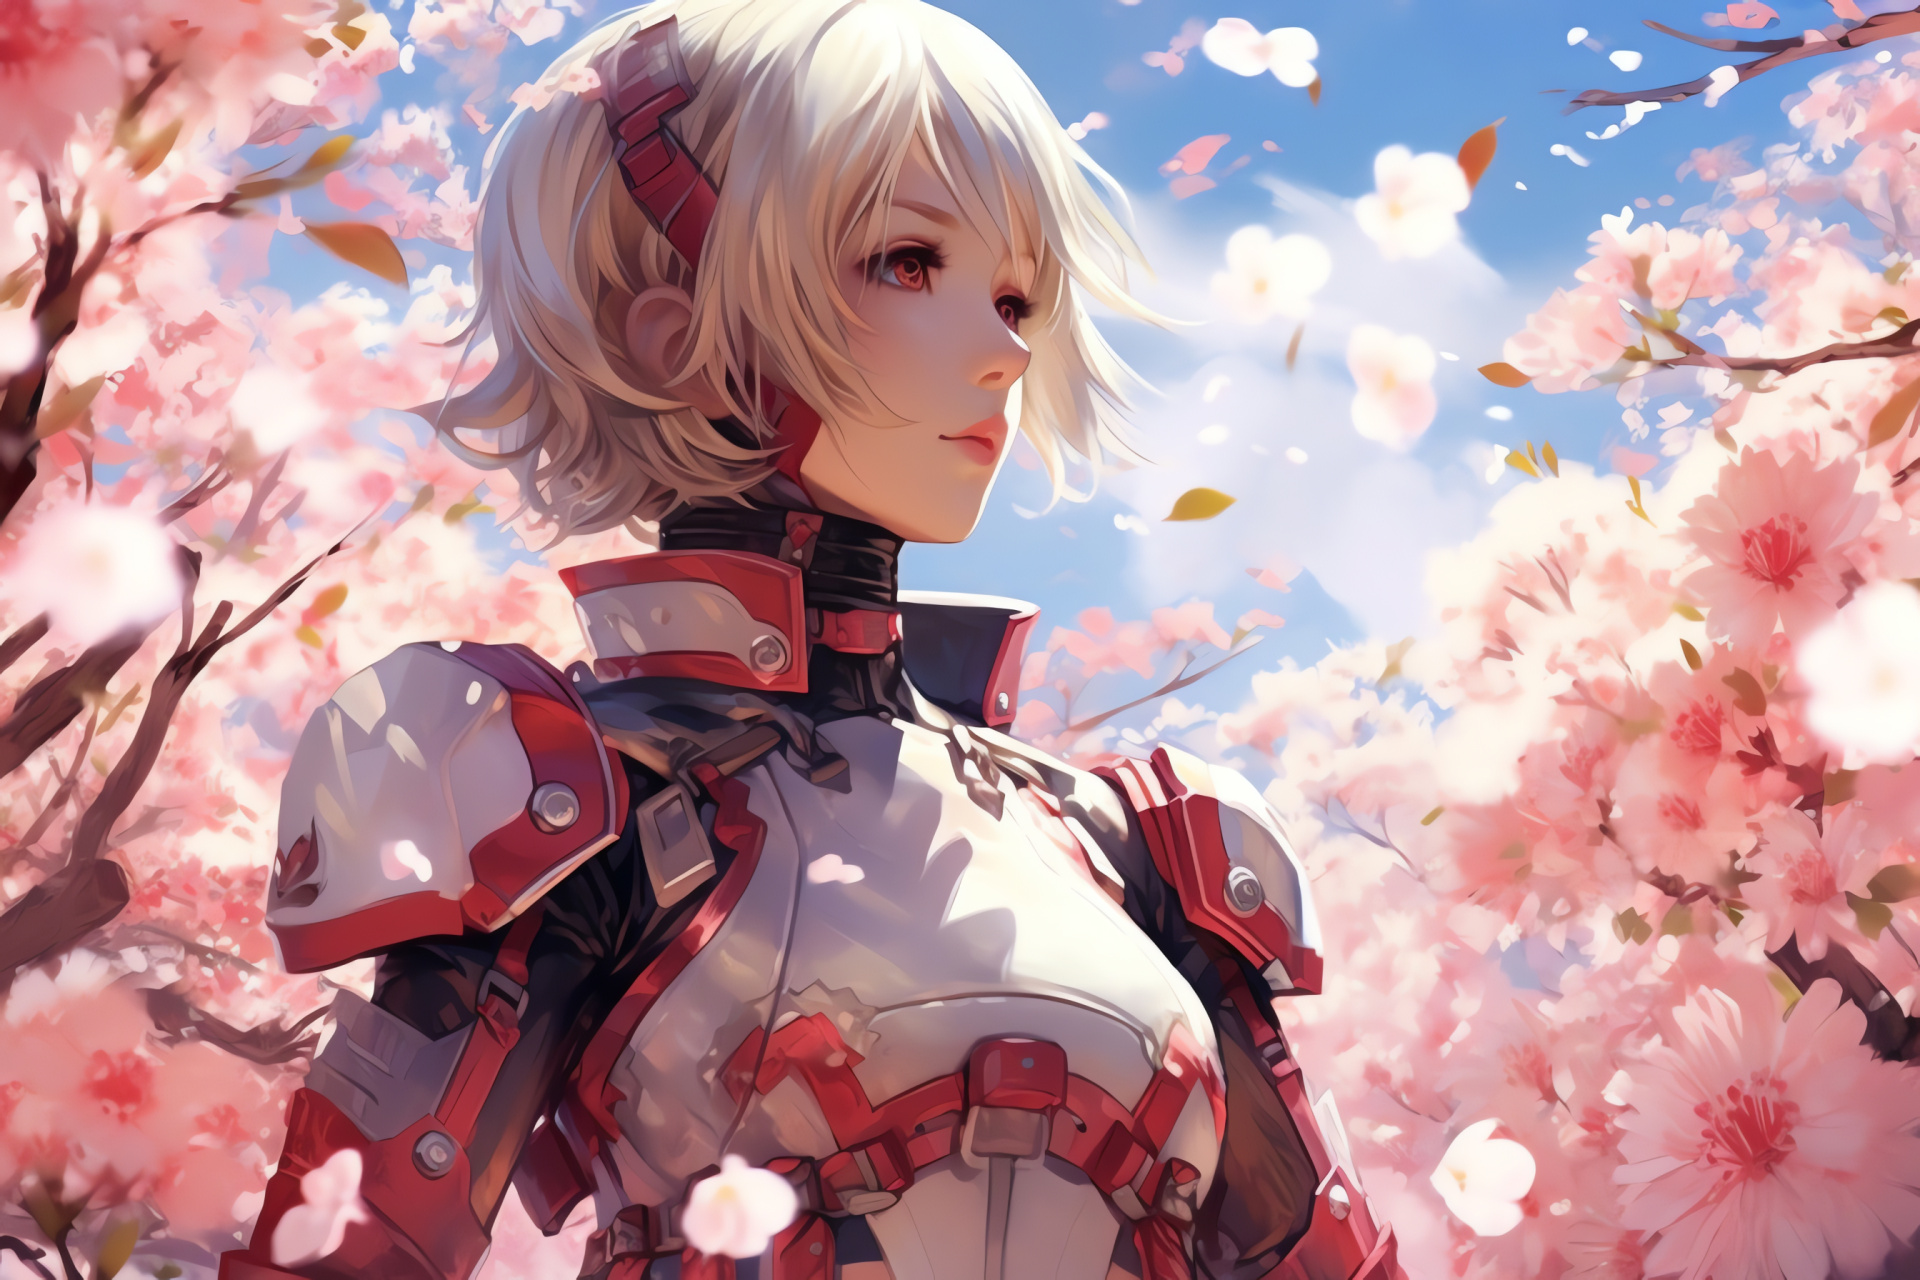 Aigis, Cherry blossoms backdrop, Springtime theme, Robotic human form, Floral scenery, HD Desktop Image